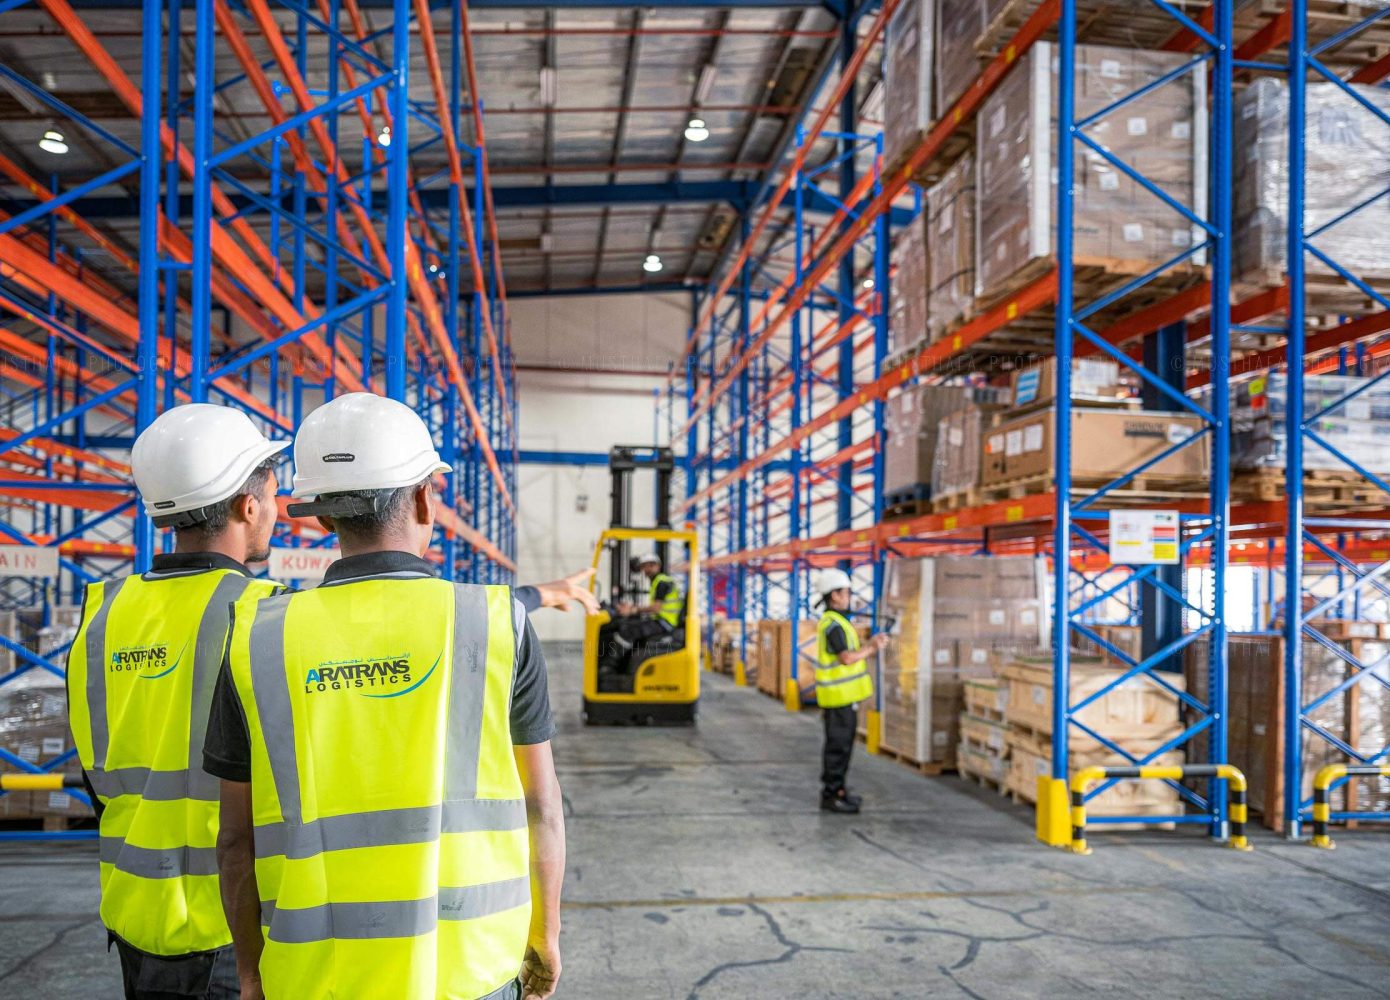 Dubai Warehouse photographer storage photography distribution industrial factory Saudi Arabia KSA Riyadh 01